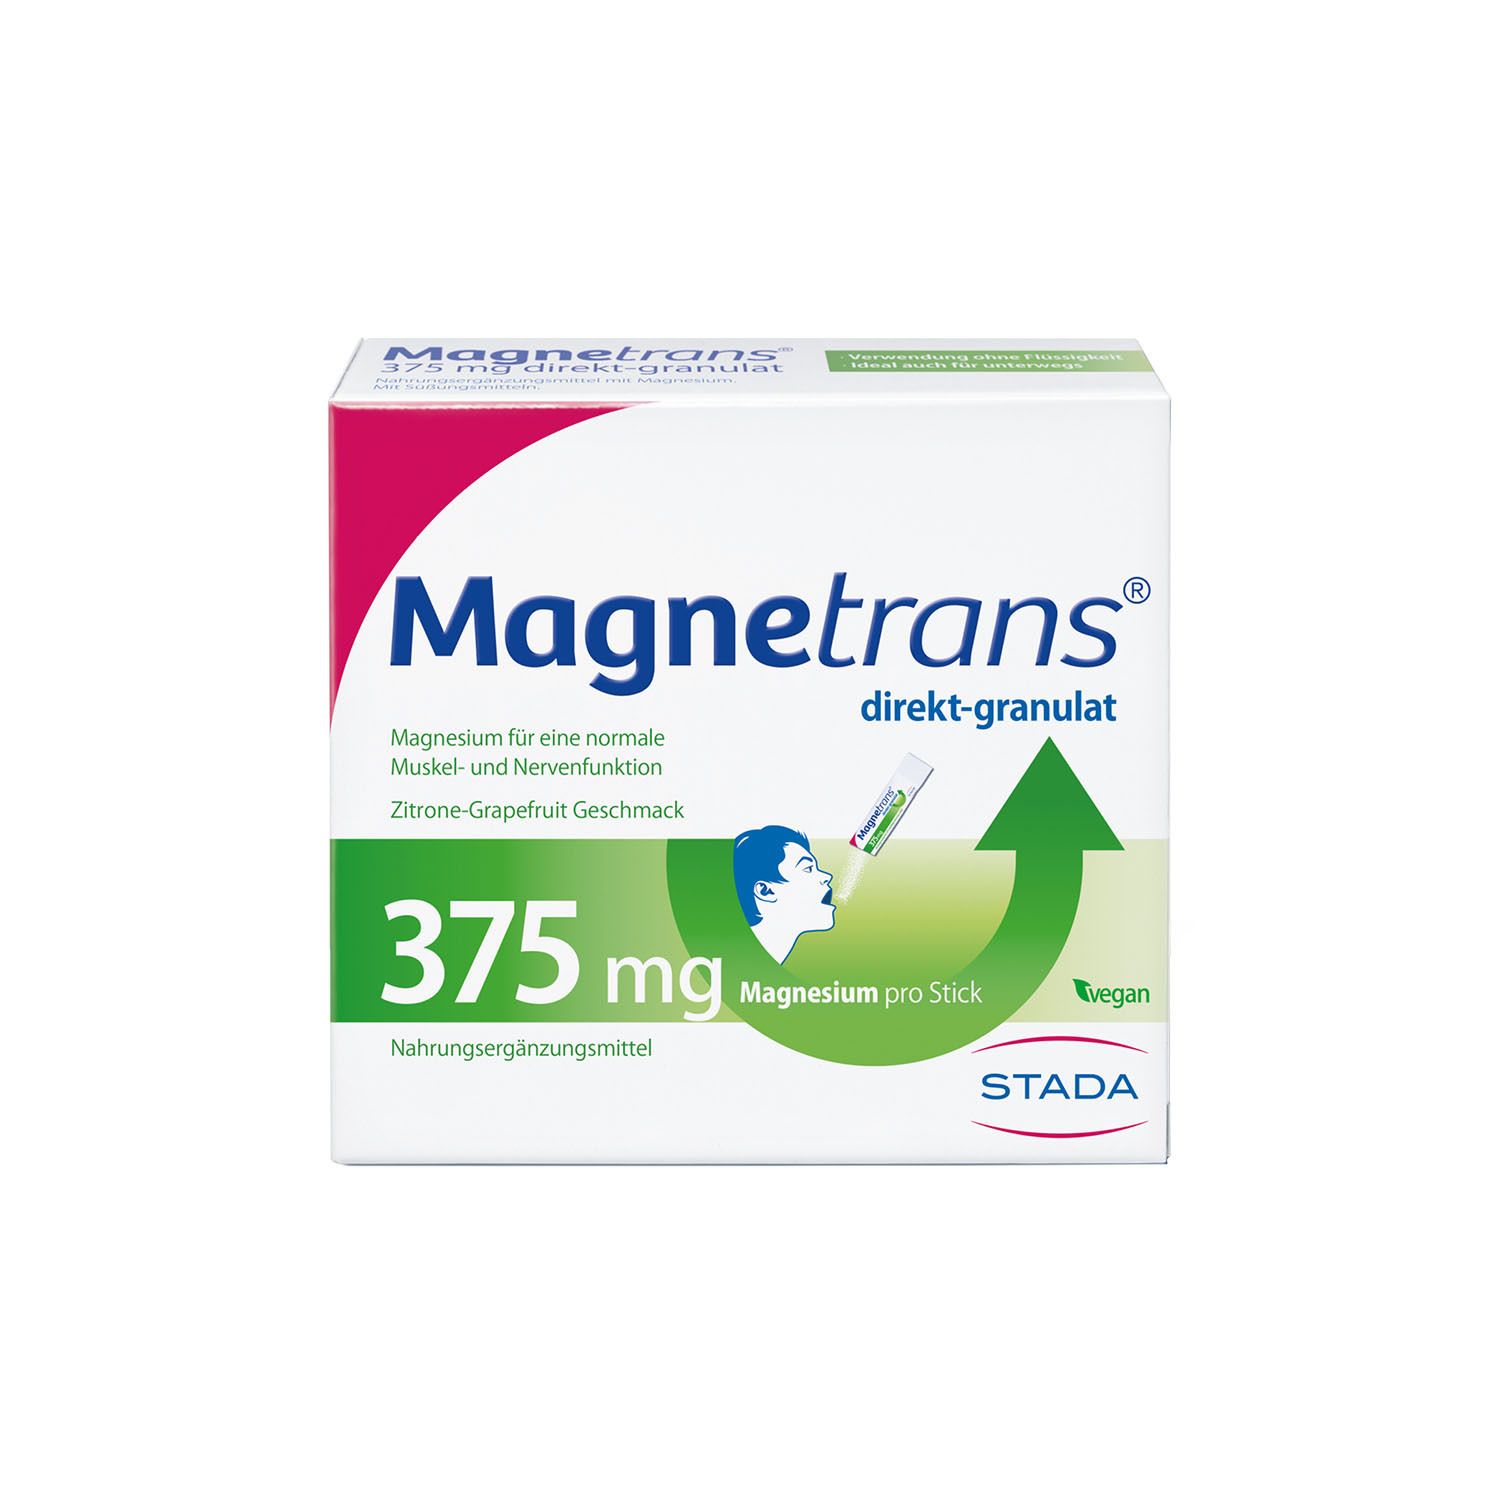 Image of Magnetrans® 375 mg direkt-granulat